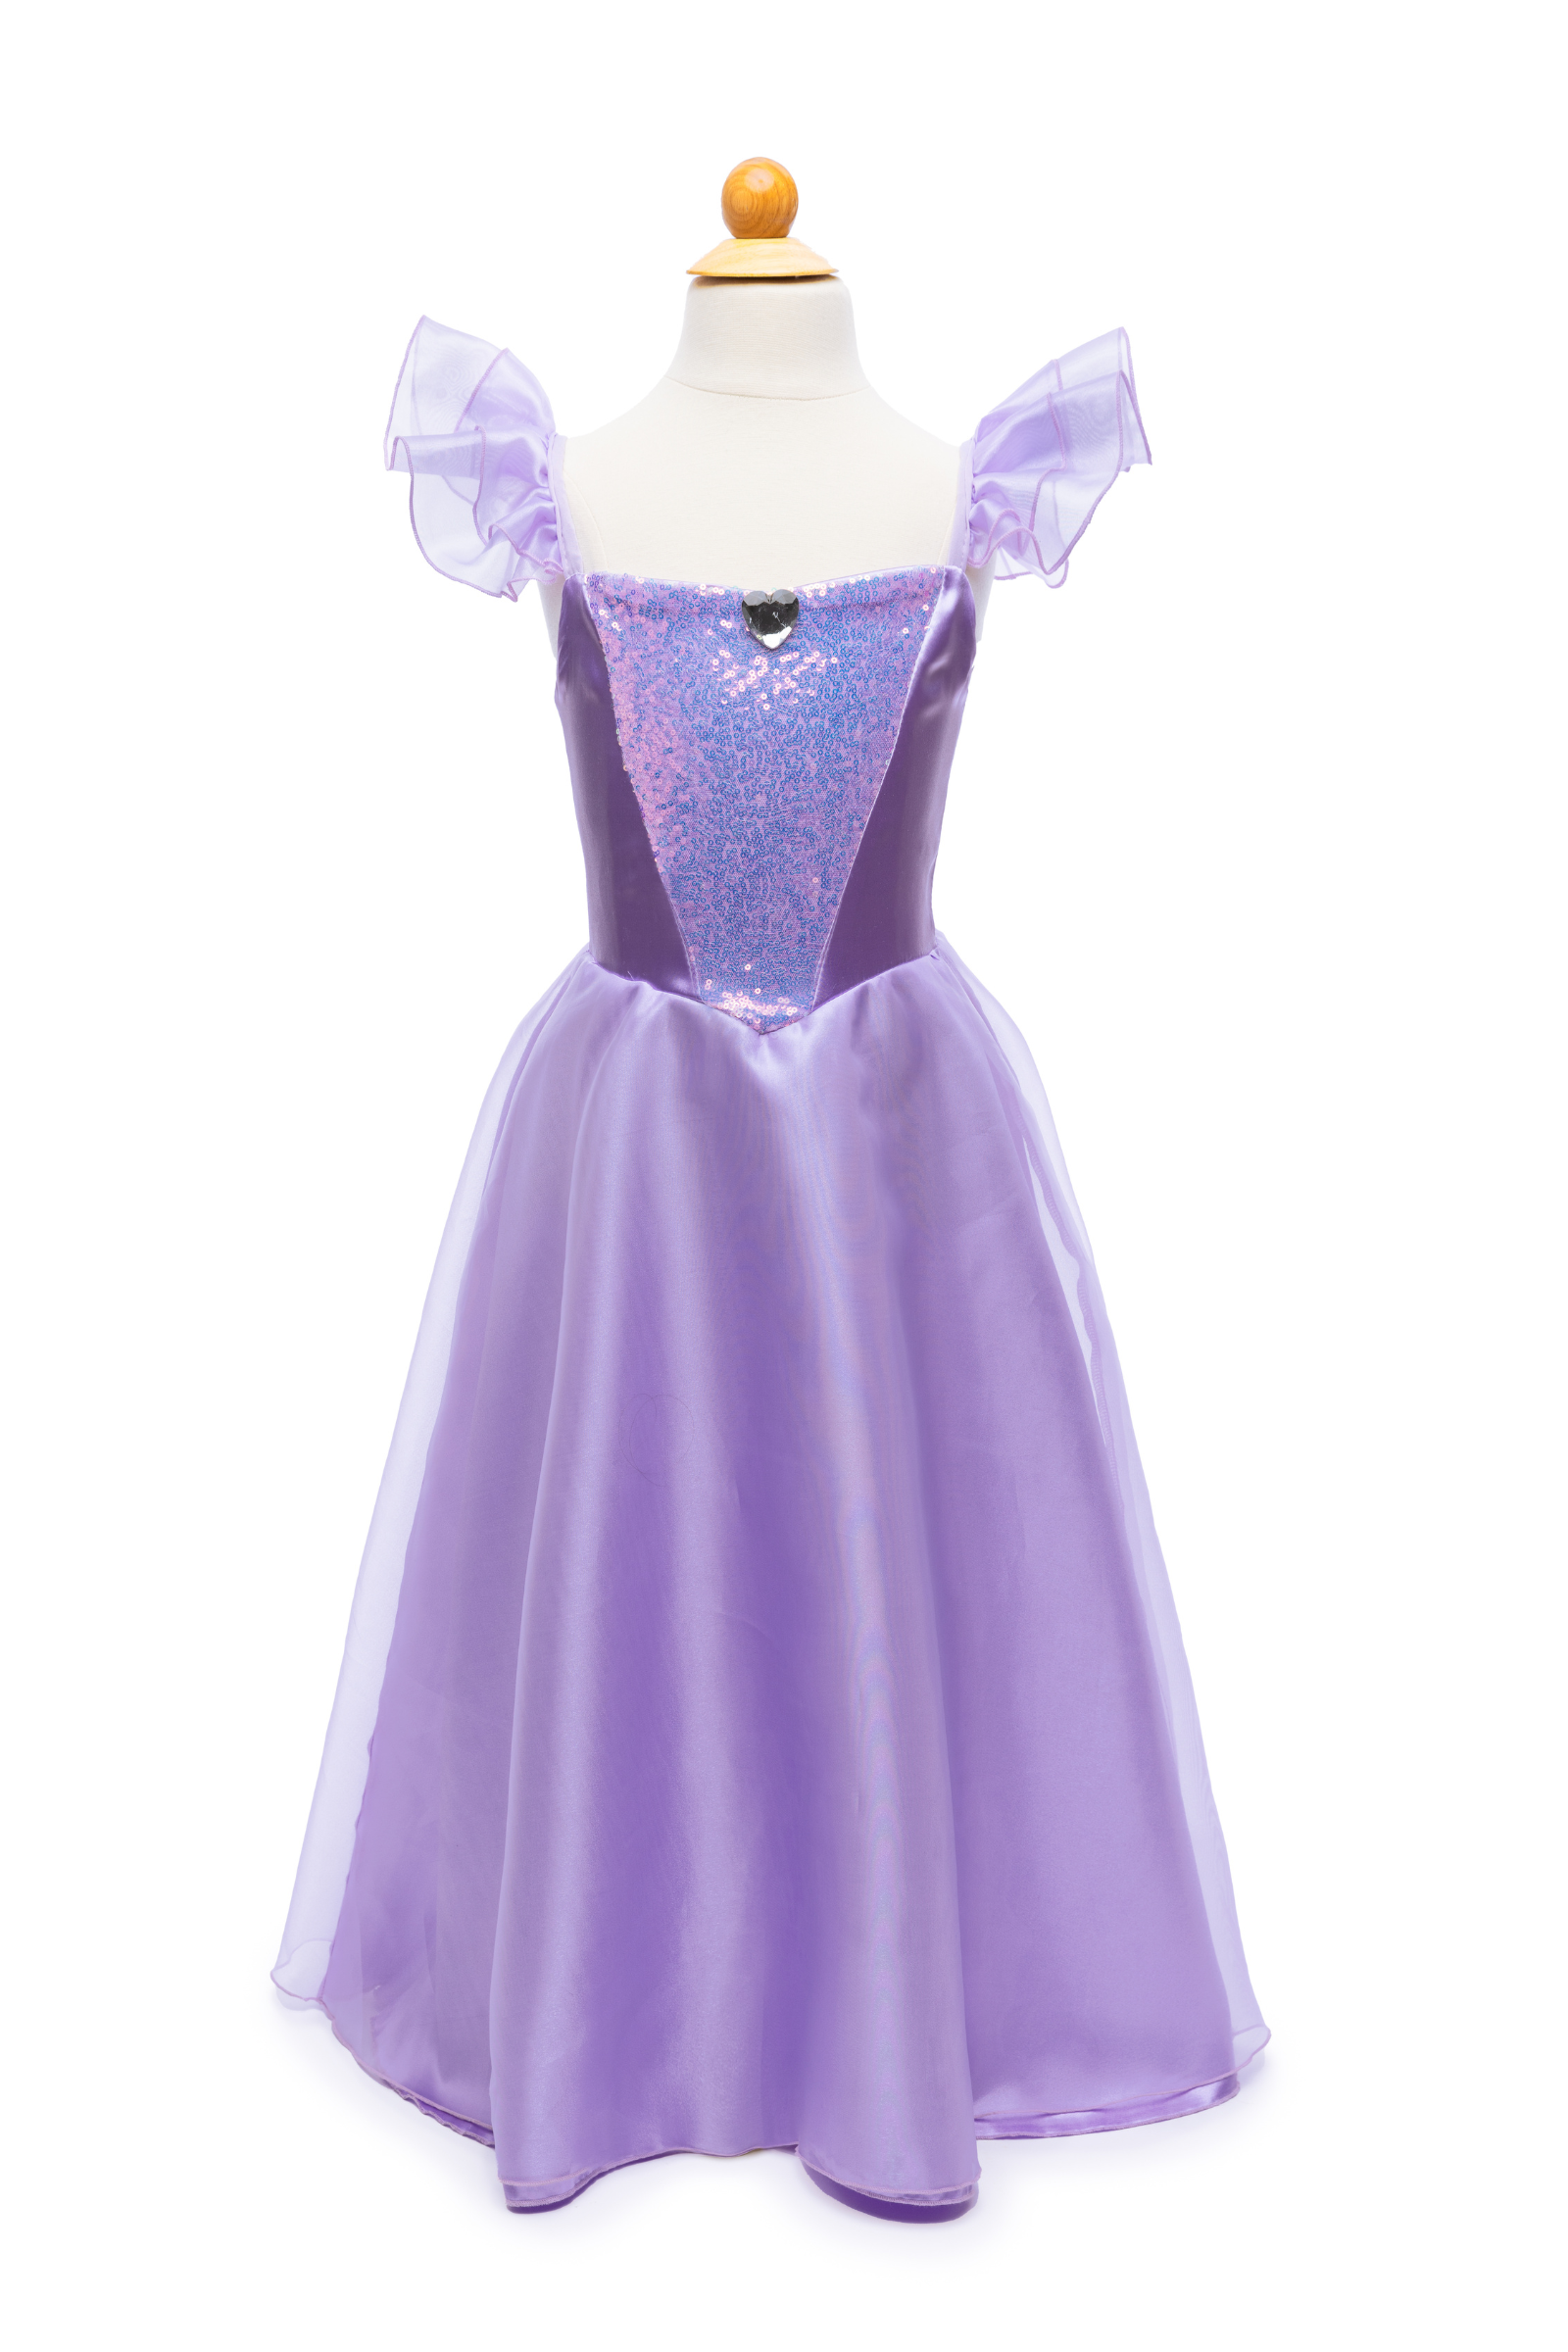 Lilac Party Princess Dress